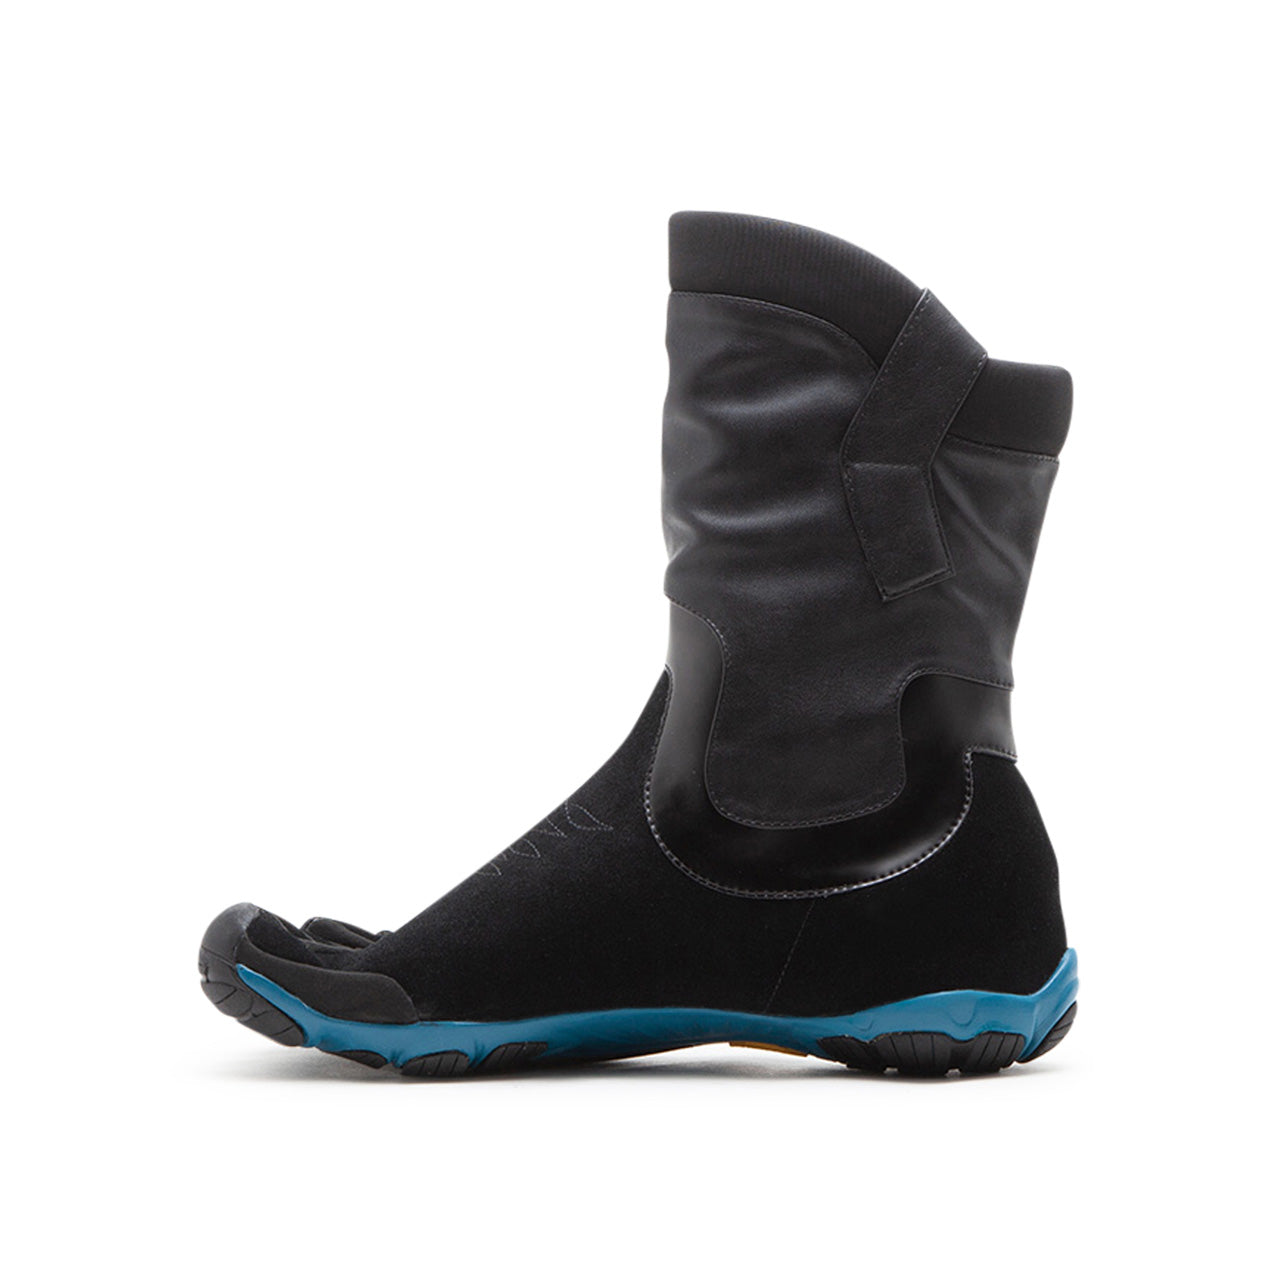 suicoke x kozaburo vff boots (black)